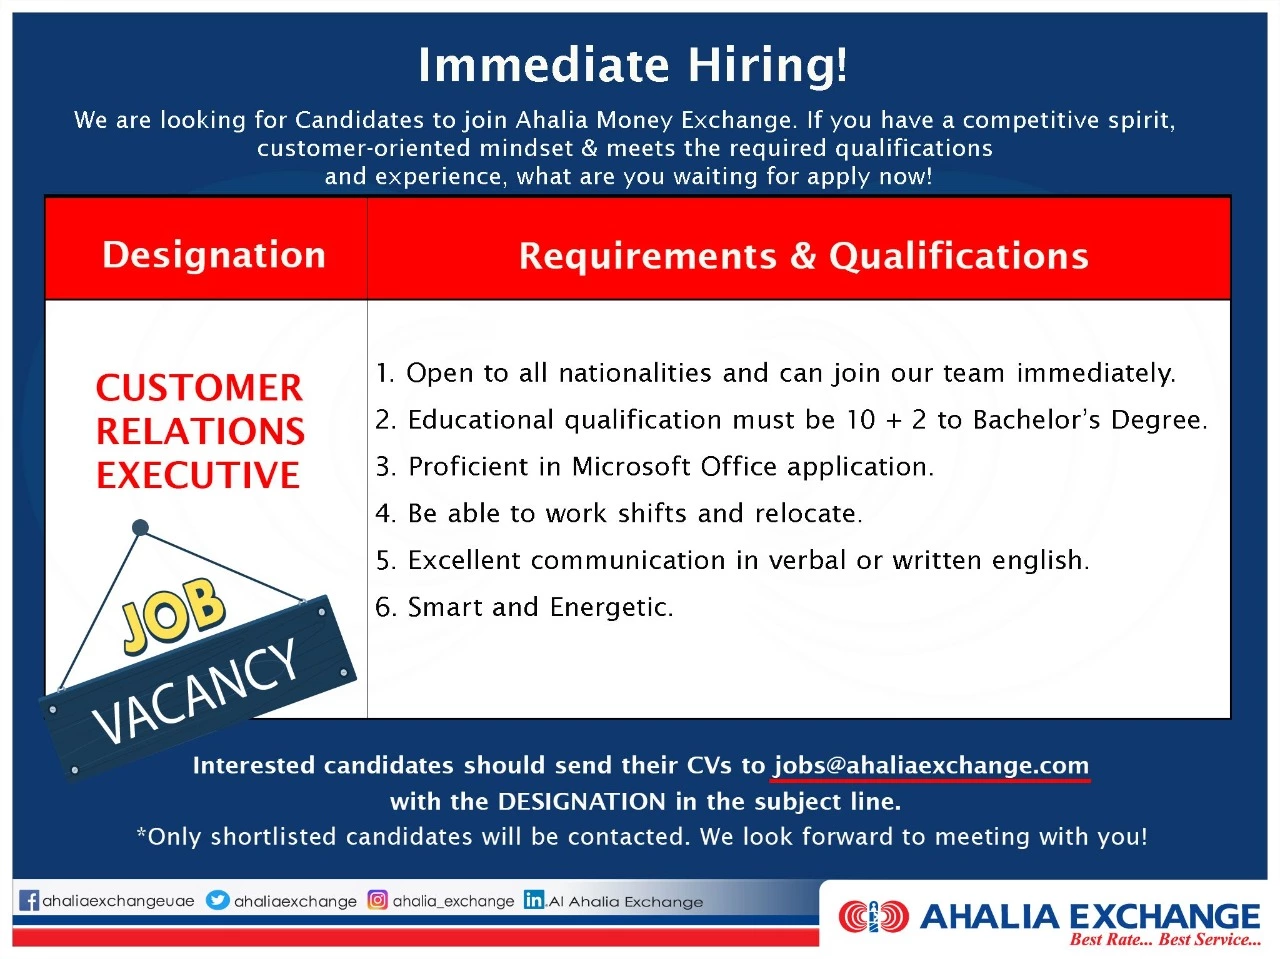 Al-Ahalia Exchange Careers Latest Job Openings 2022